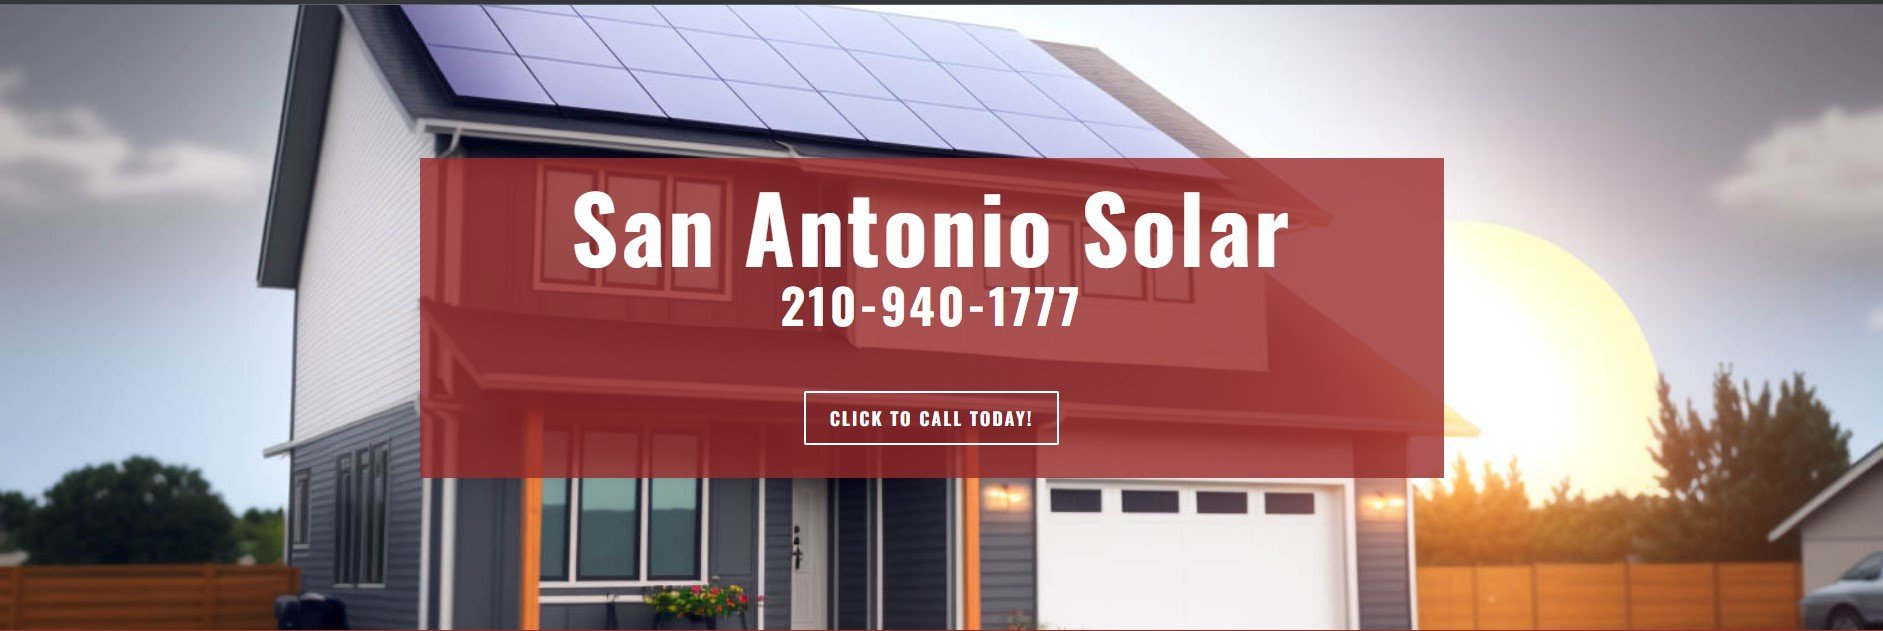 SS San Antonio Solar cover